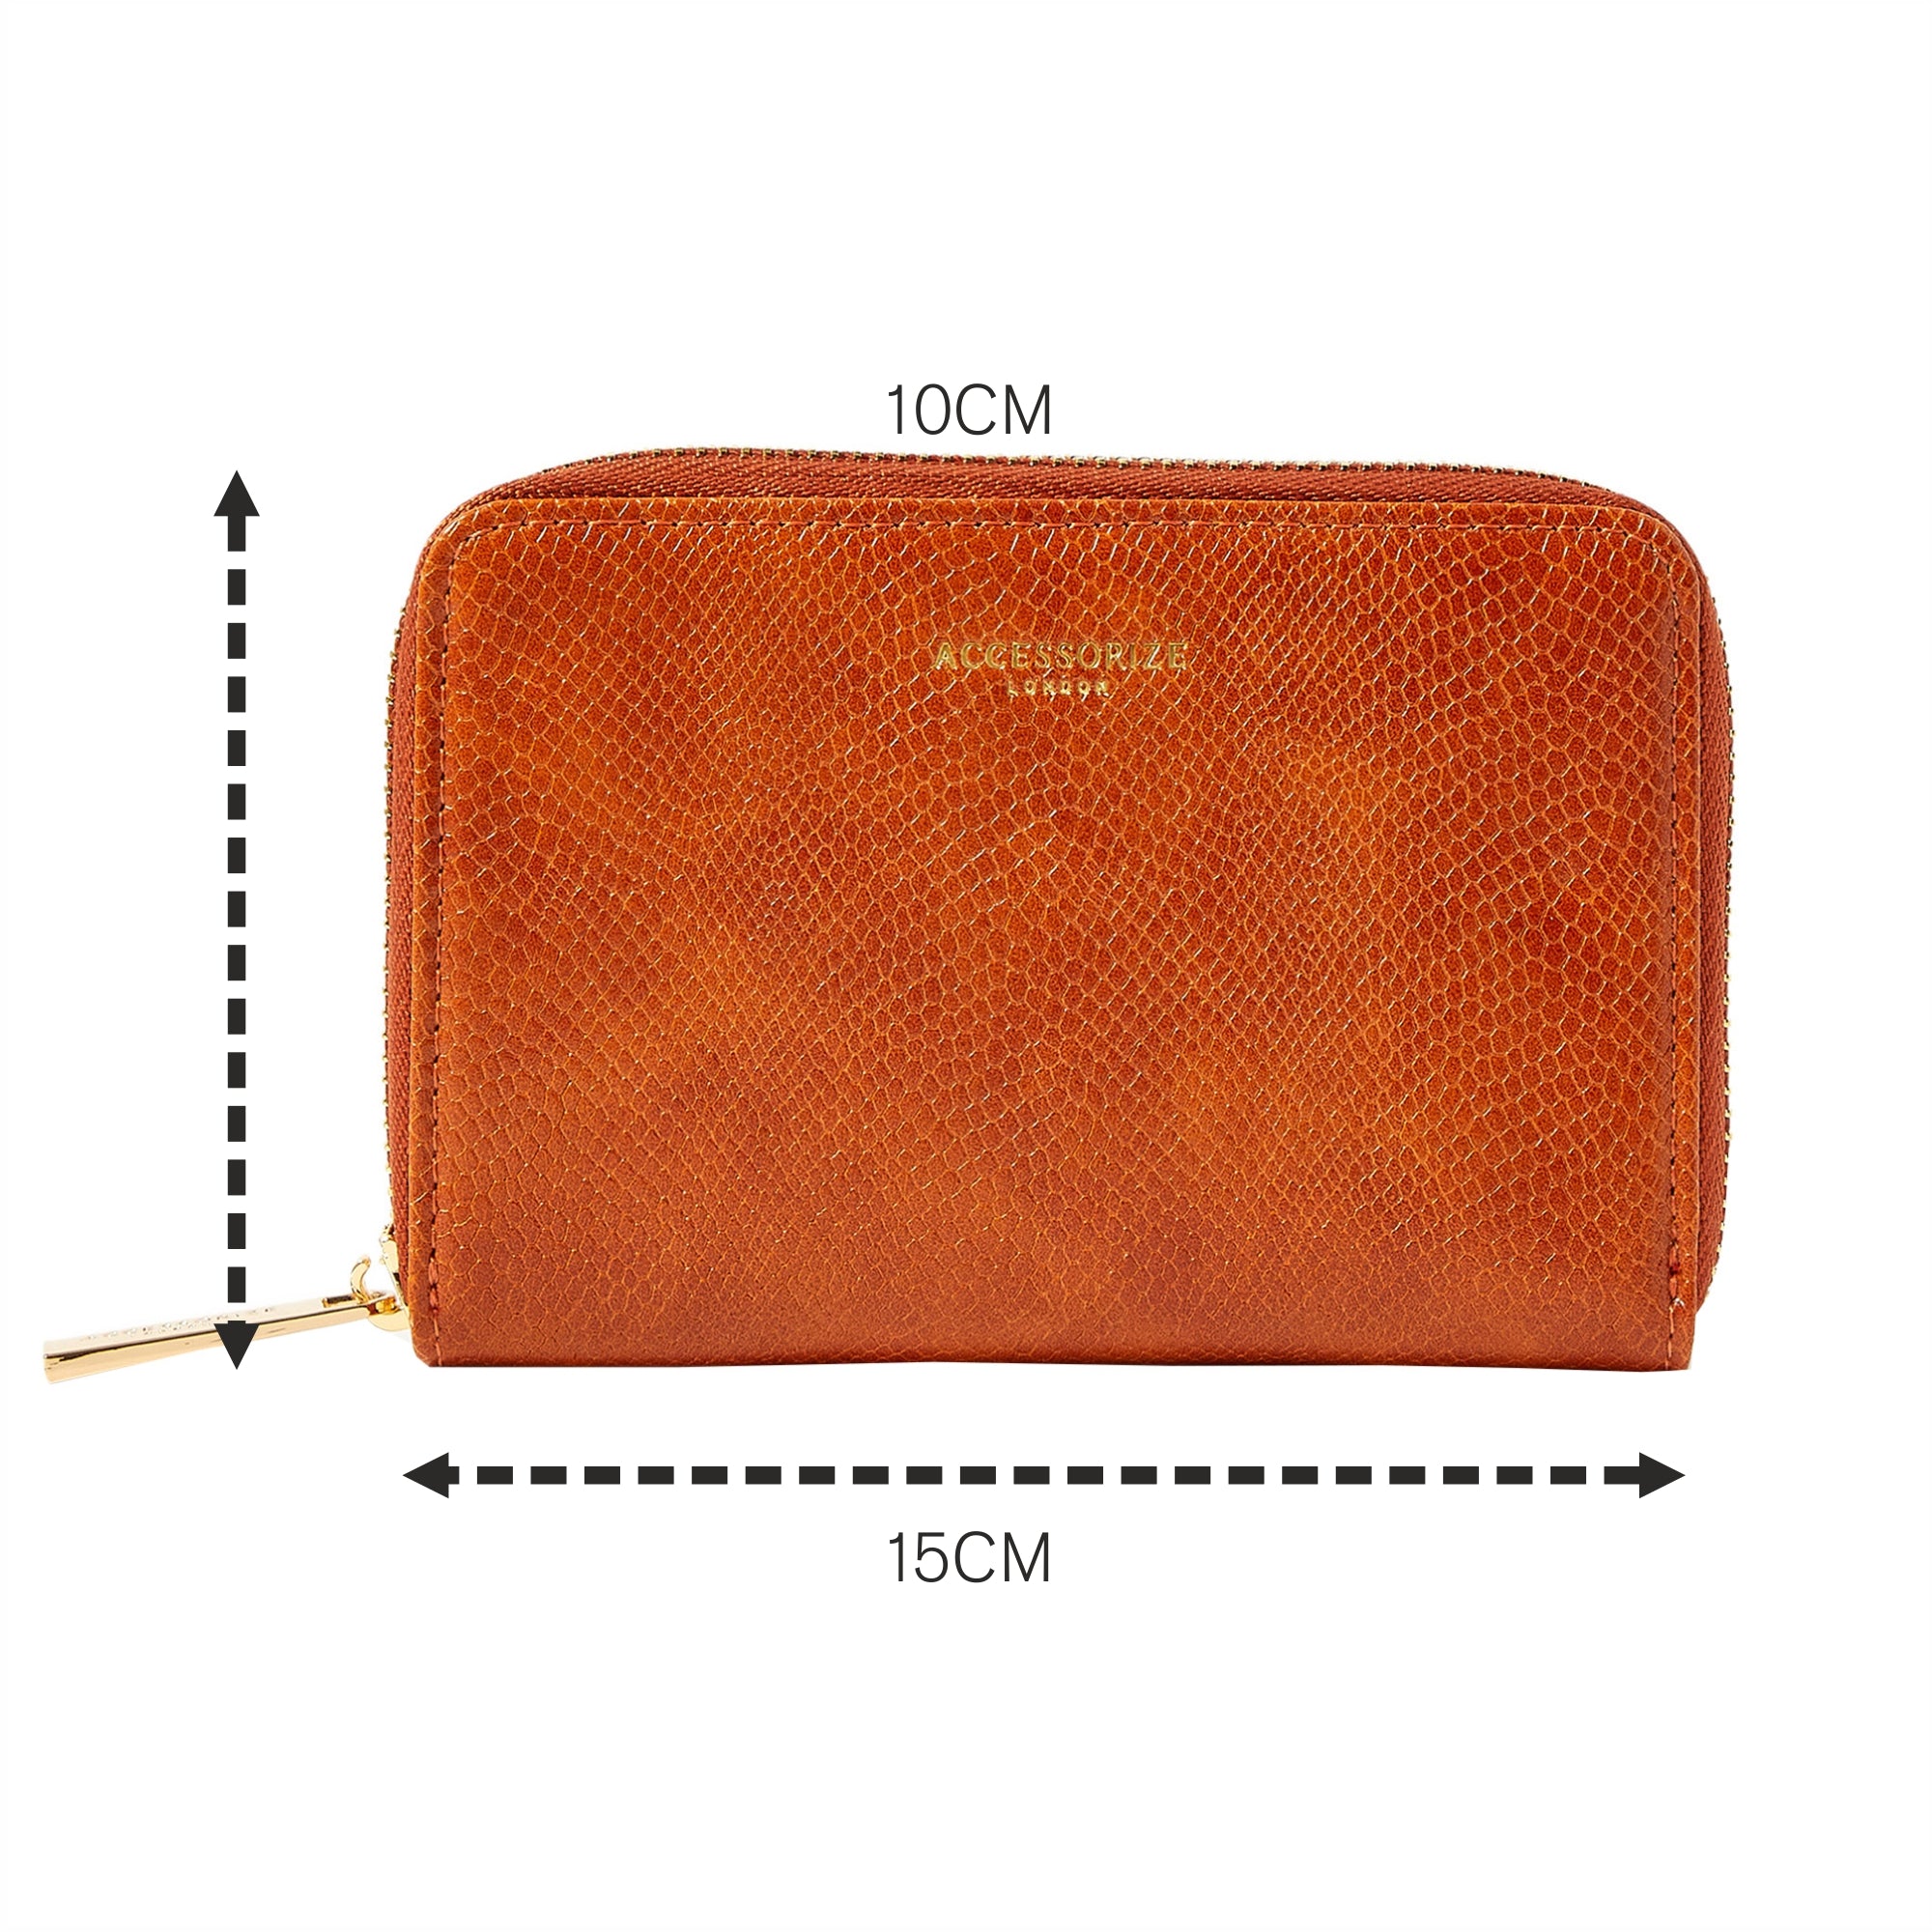 Accessorize London Women's Faux Leather Orange Mid Sized Zip Around Wallet